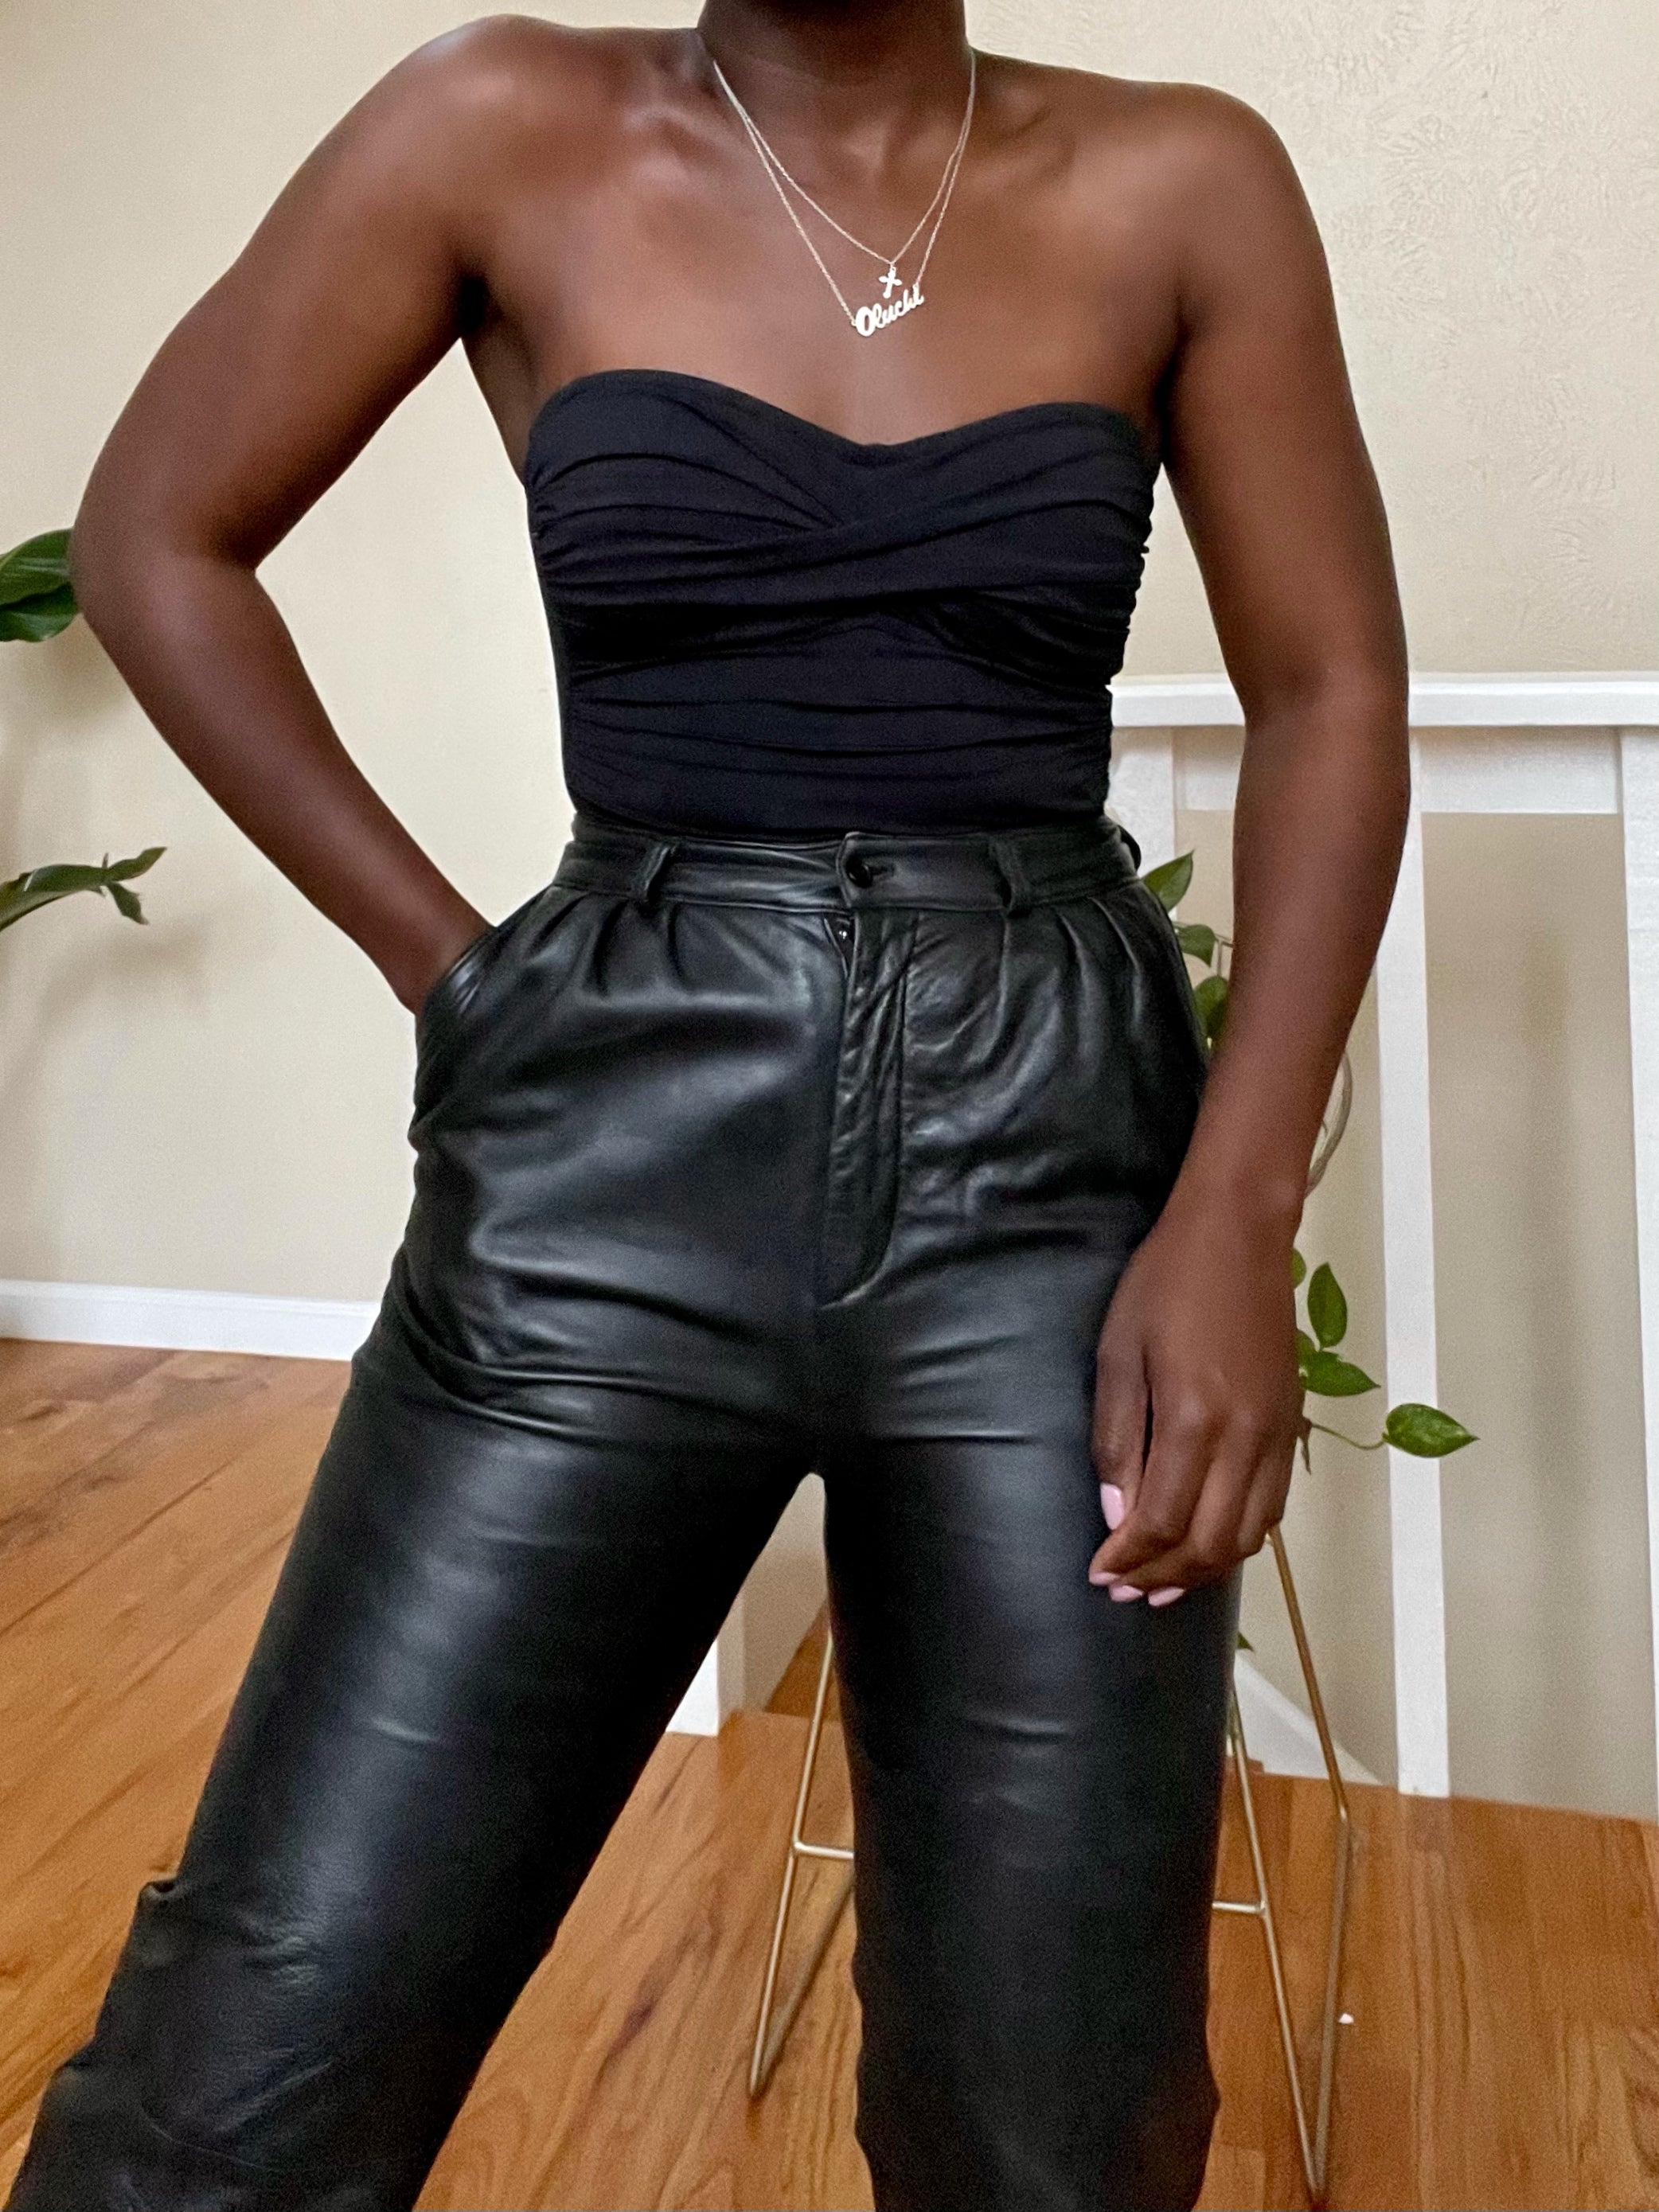 Black Faux Leather Pants Women 2021 New Straight Leg Pants Fashion Har